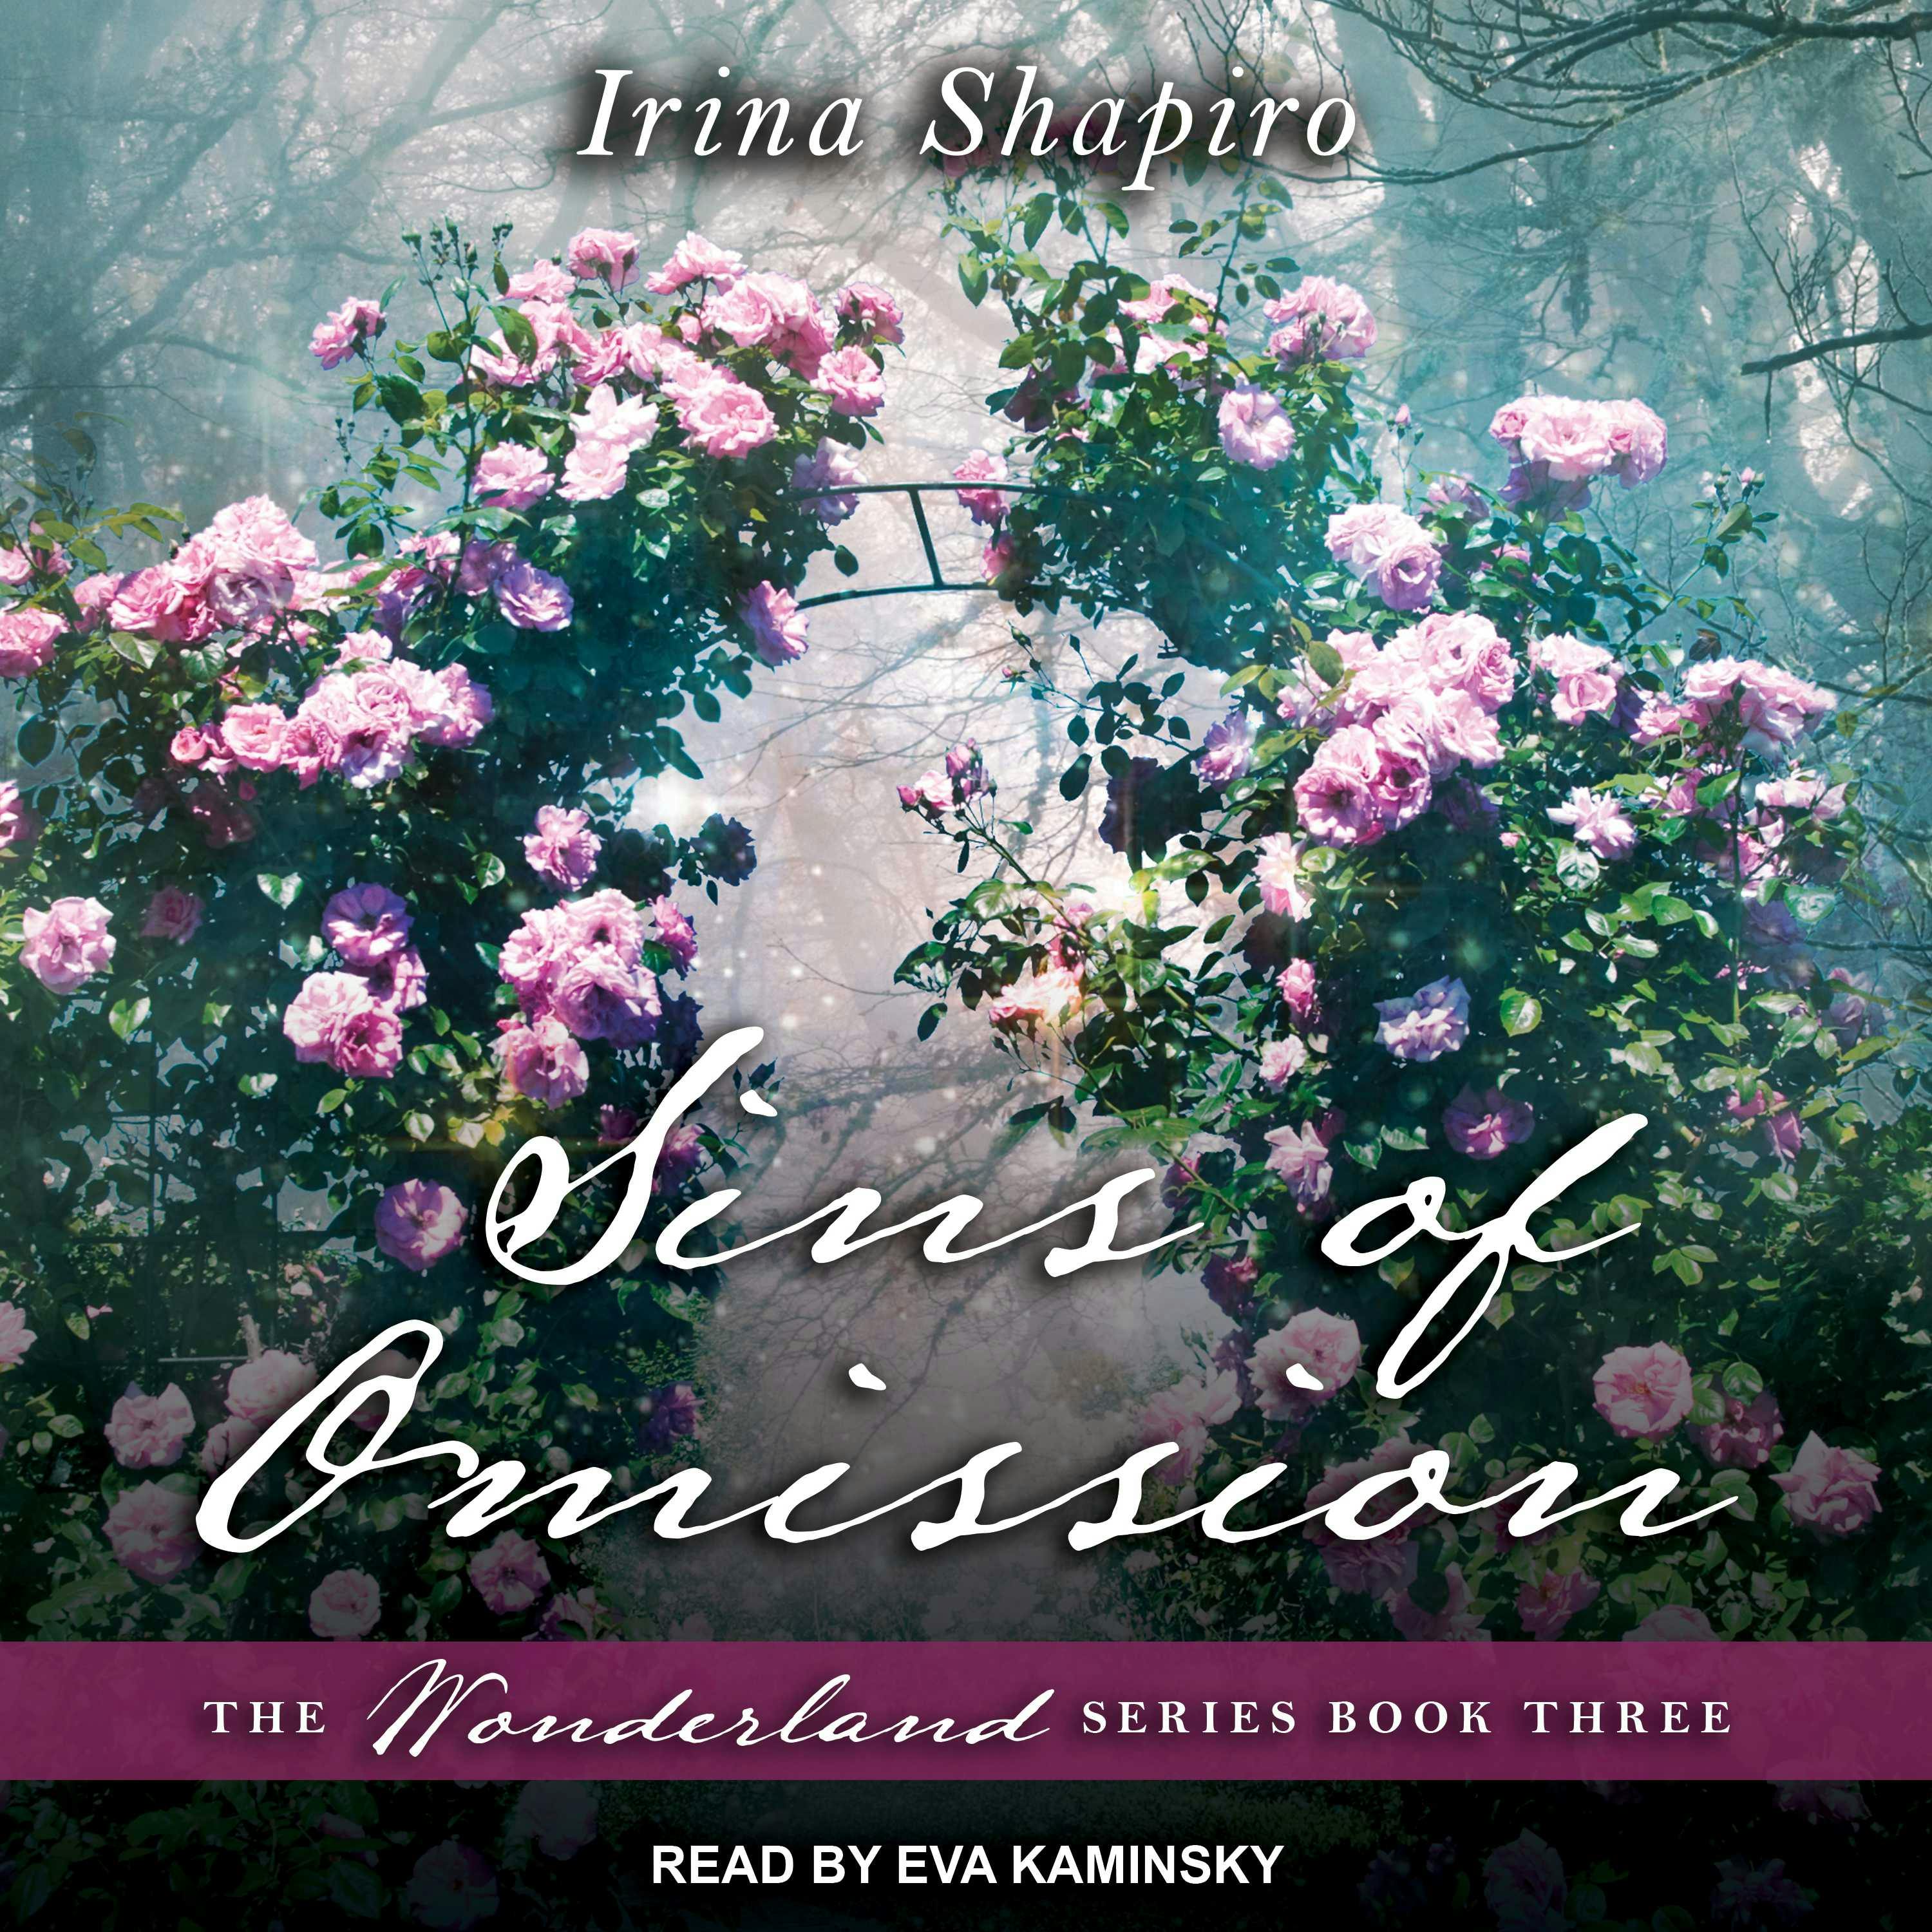 Sins of Omission - Irina Shapiro